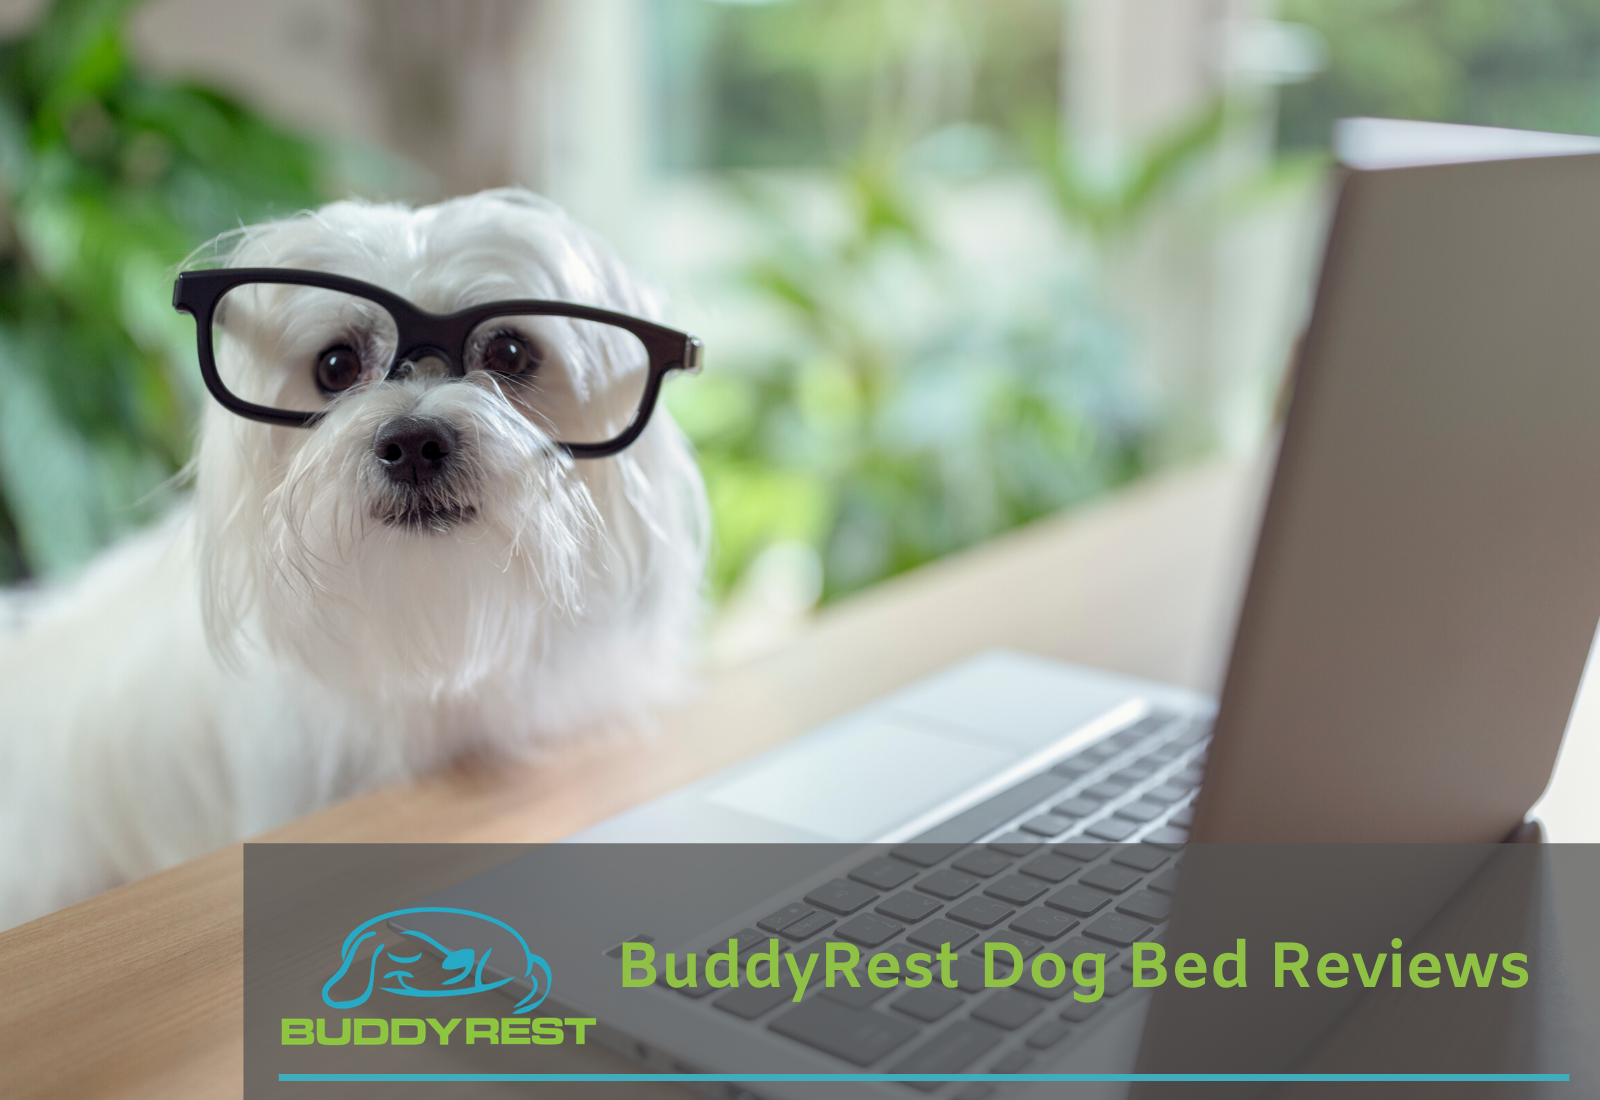 BuddyRest Dog Bed Reviews